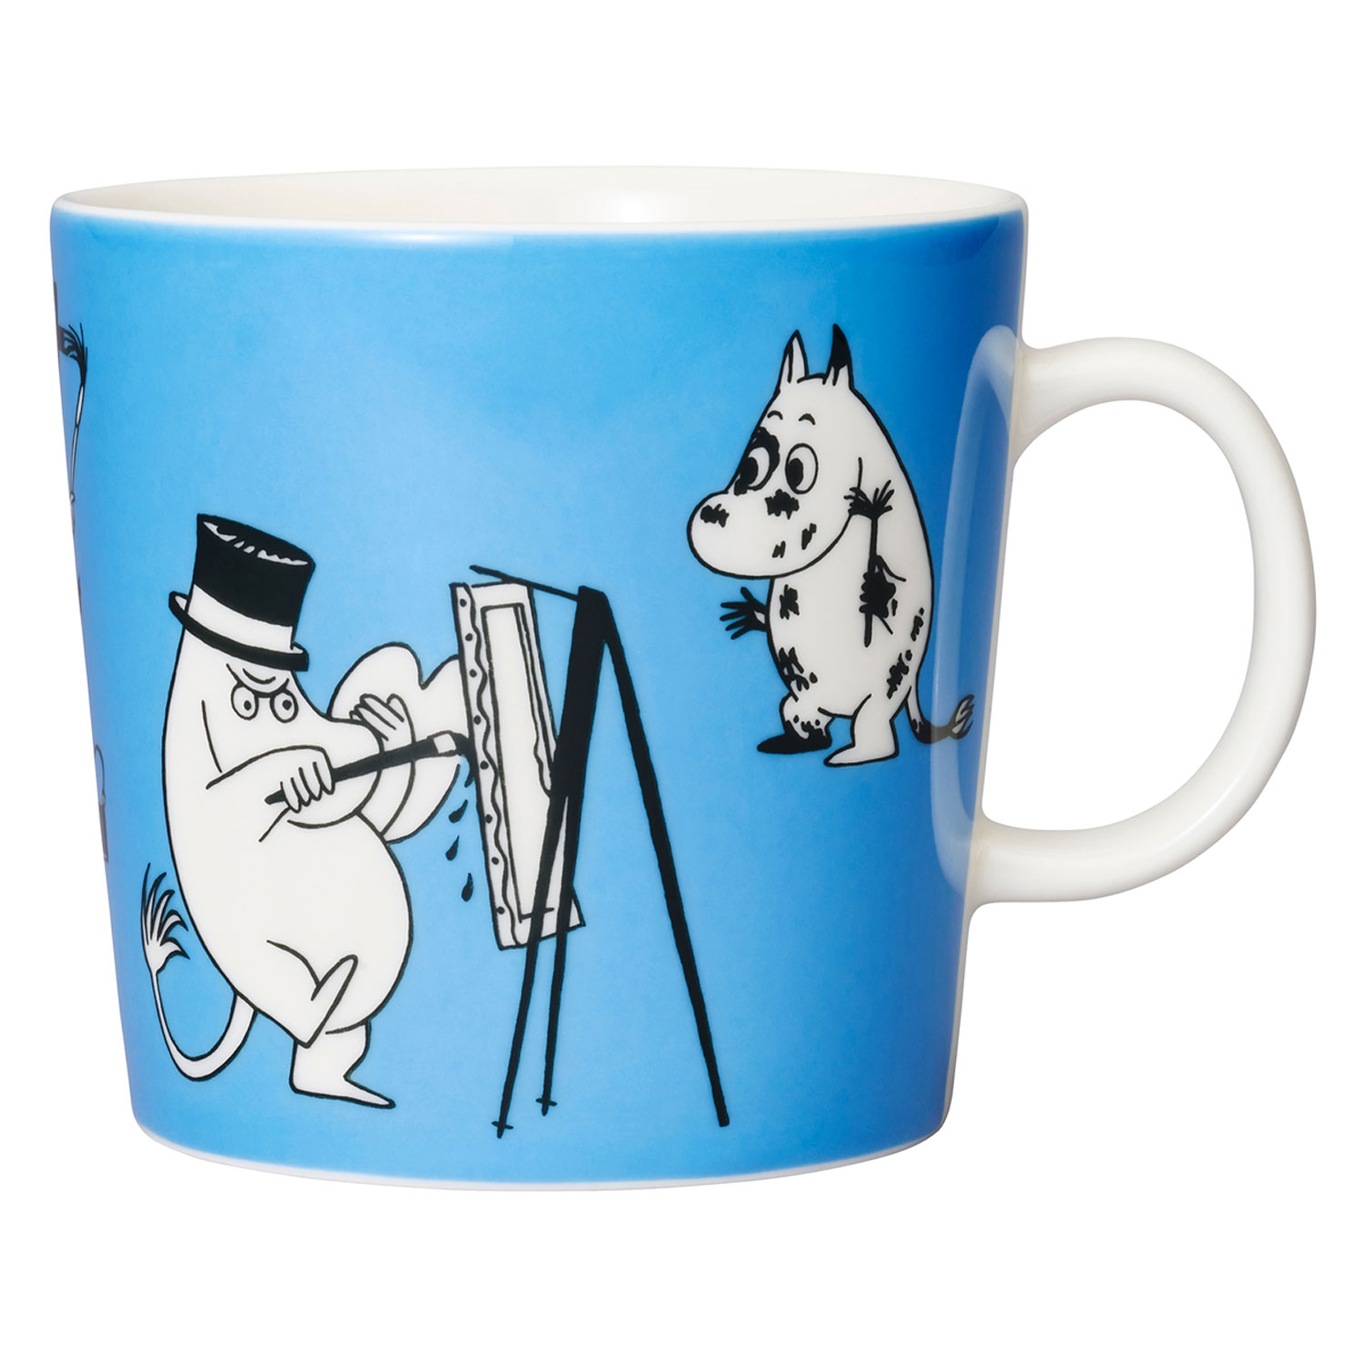 Moomin Mug 40 cl, Blue